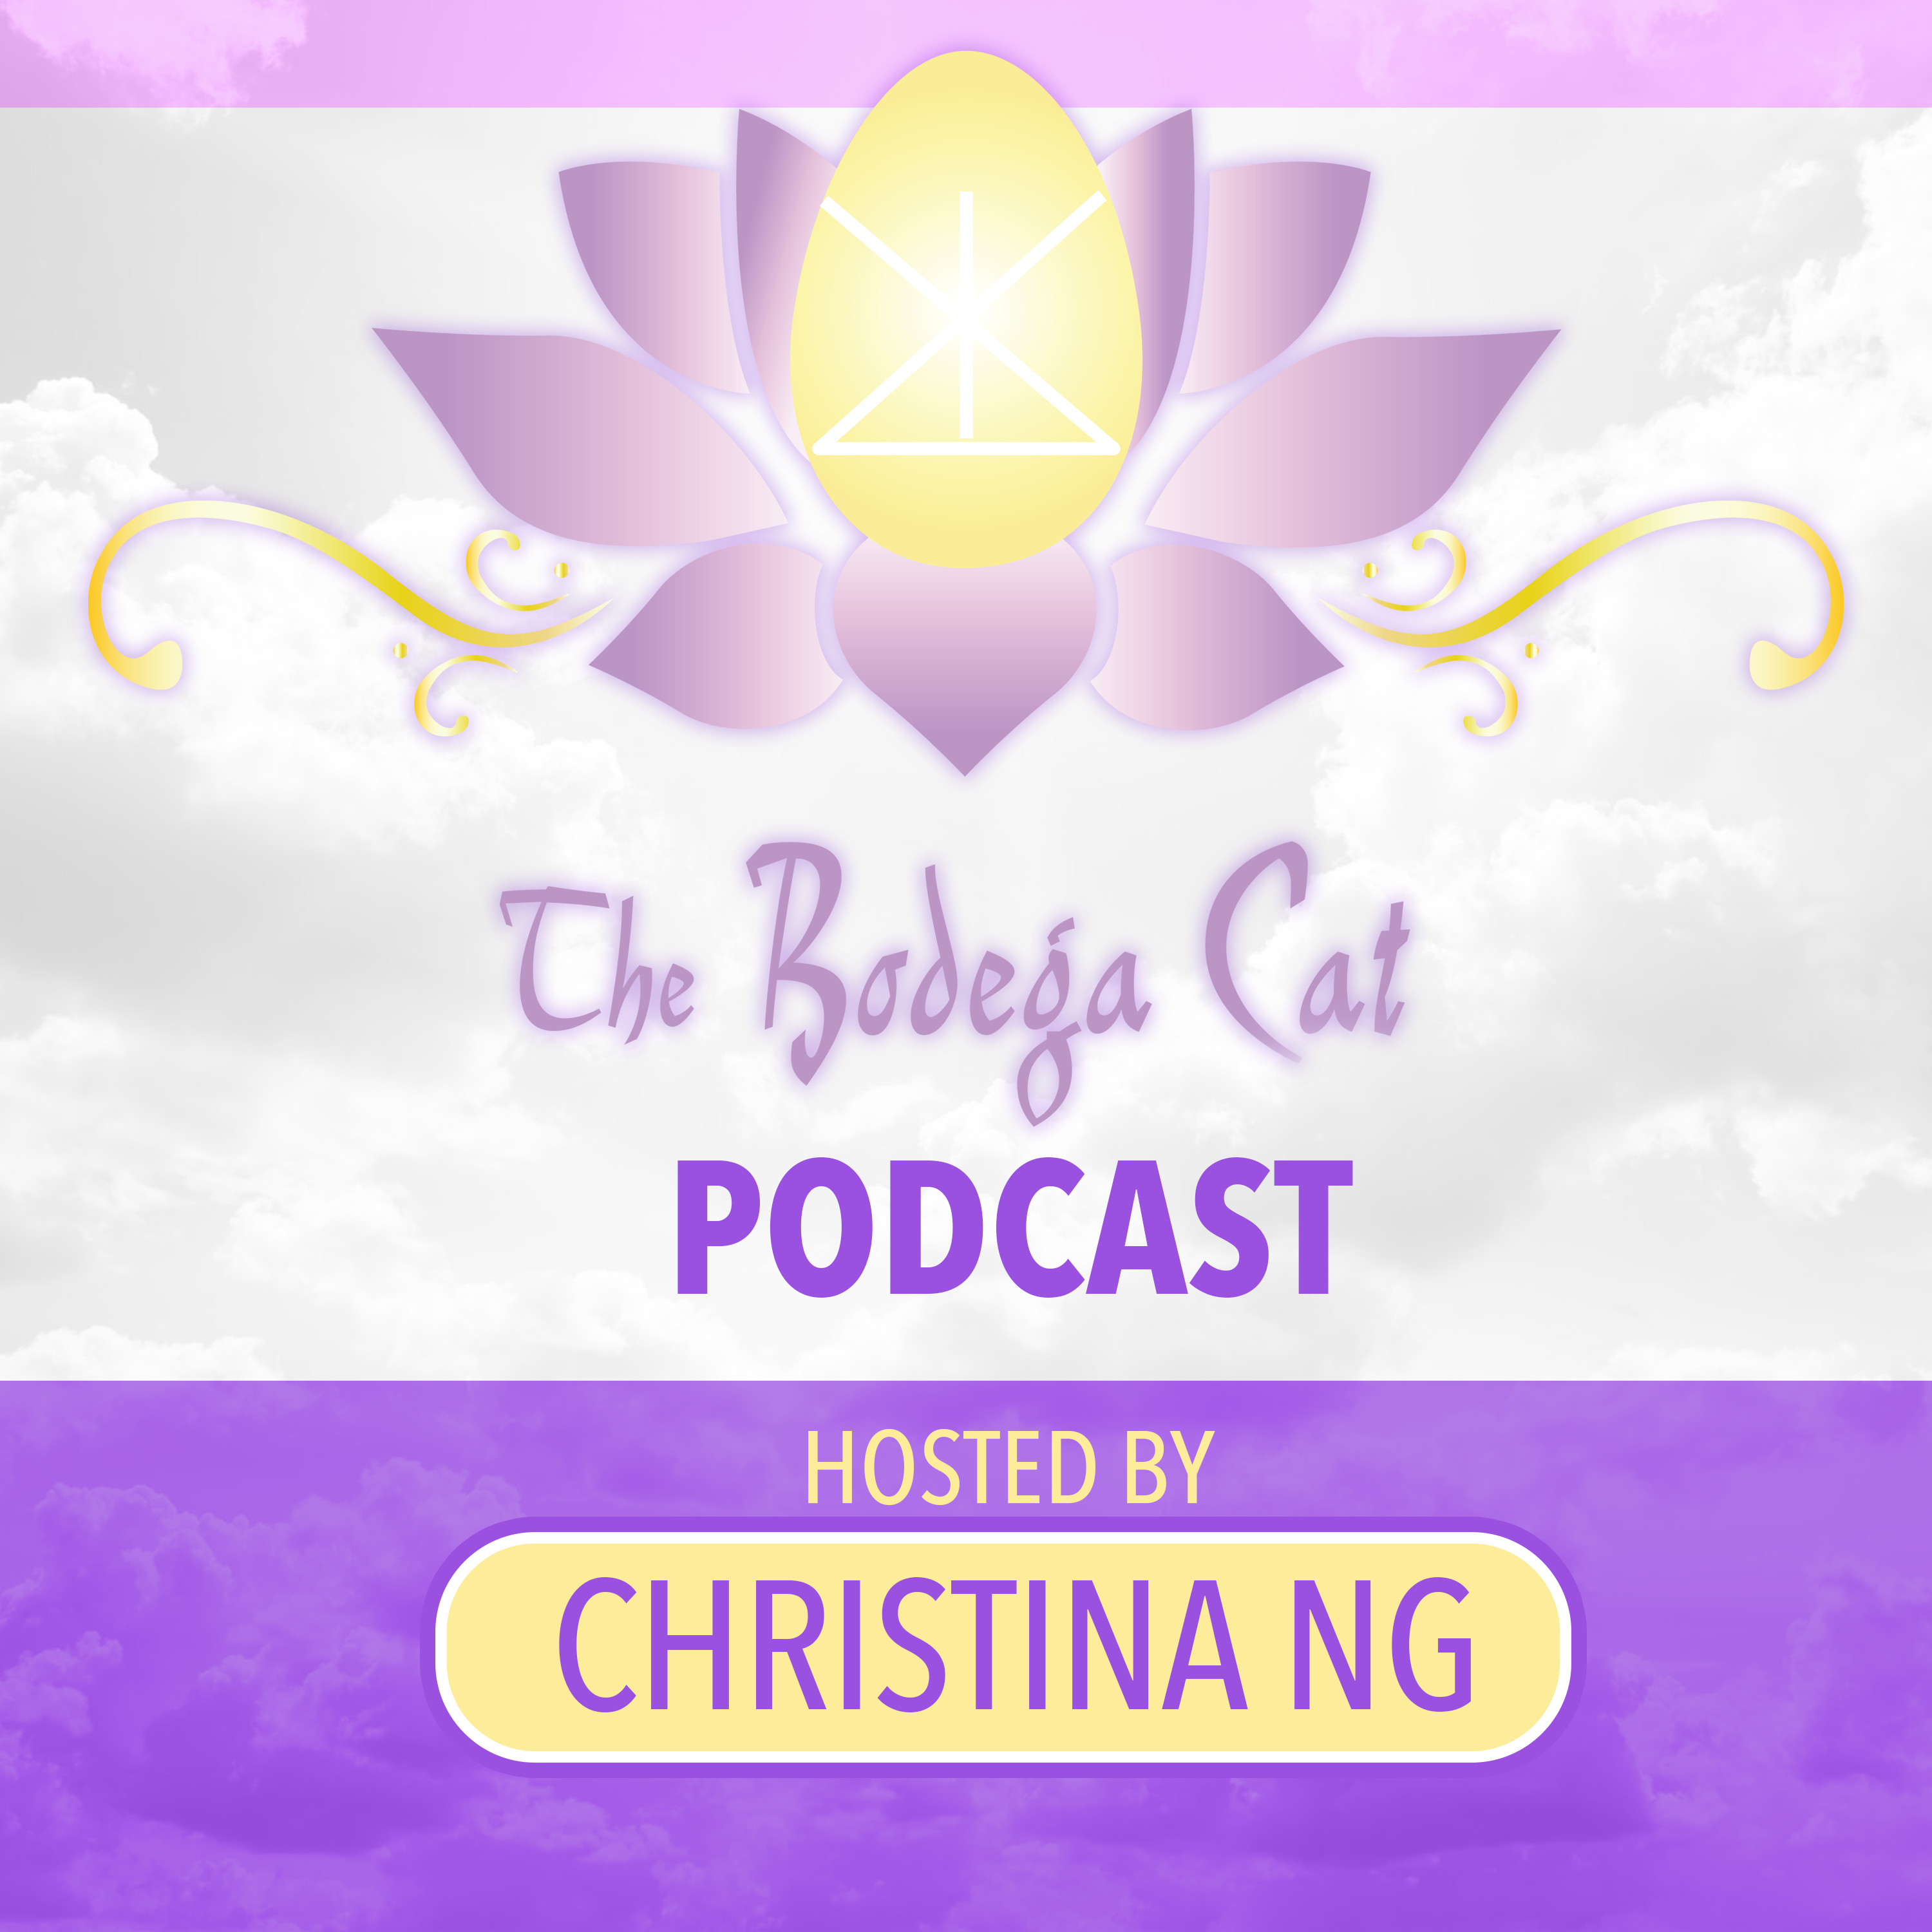 The Bodega Cat Podcast